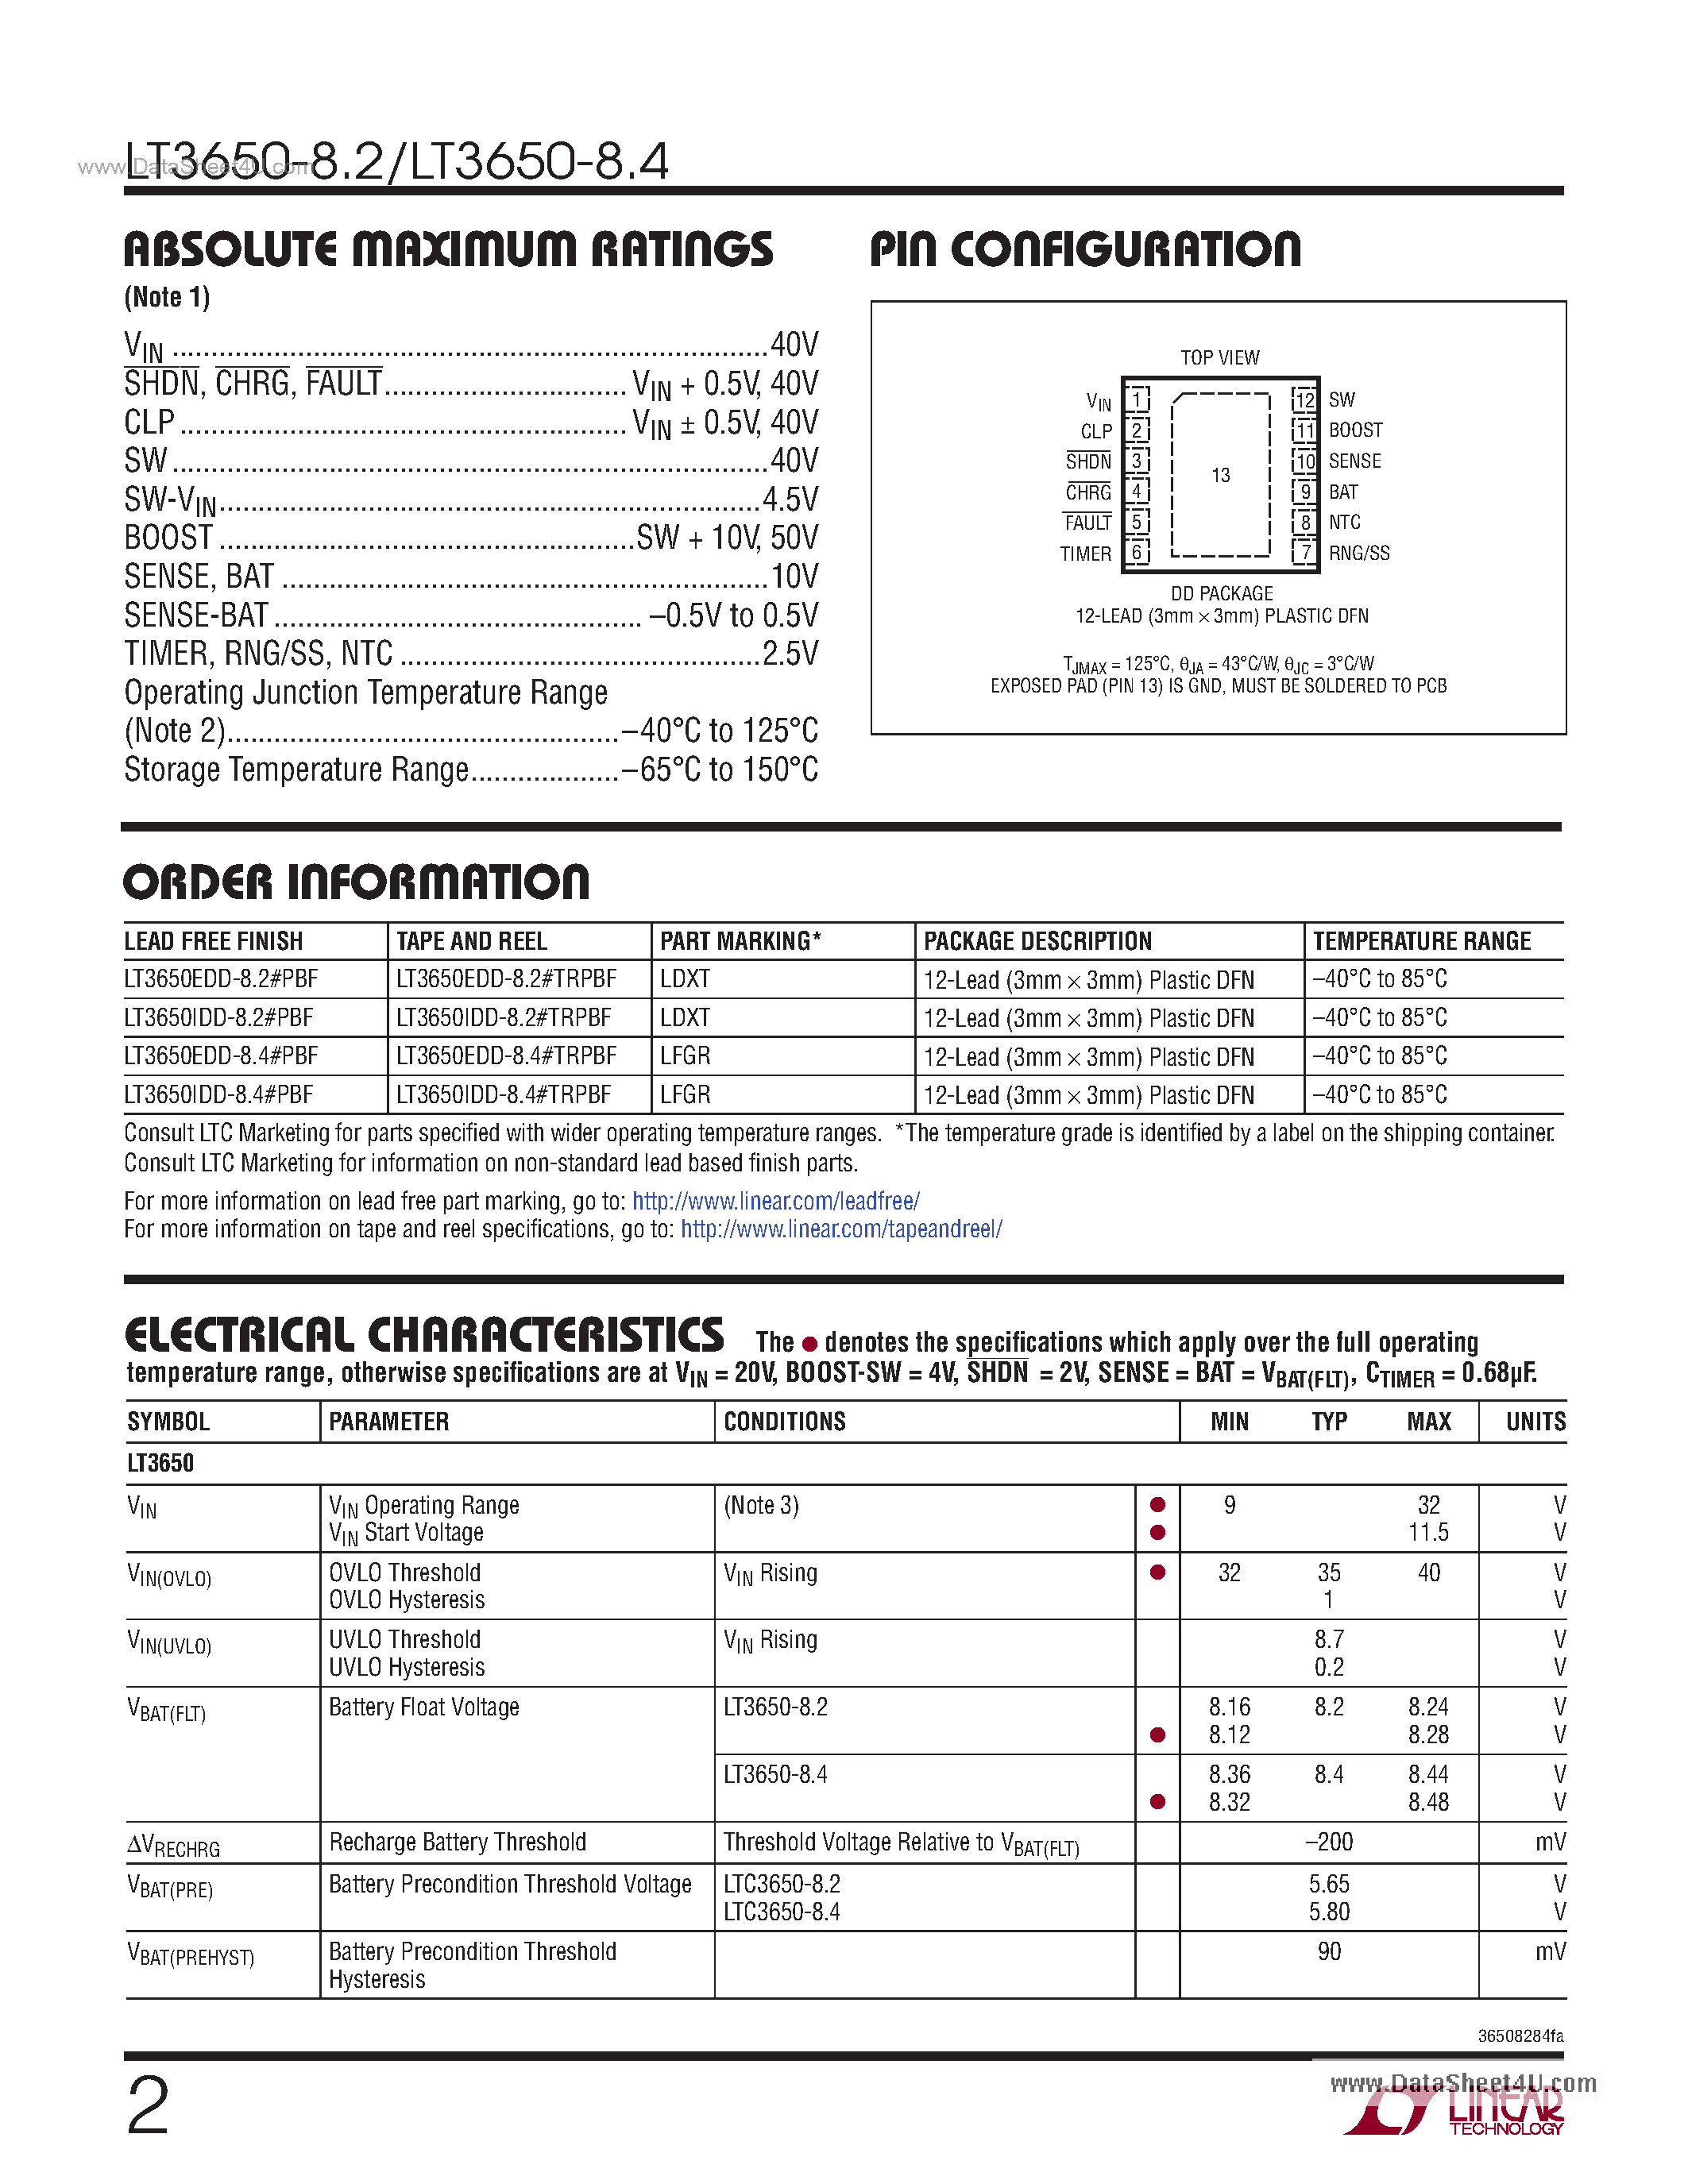 Даташит LT3650-8.2 - (LT3650-8.2 / -8.4) High Voltage 2 Amp Monolithic Li-Ion Battery Charger страница 2